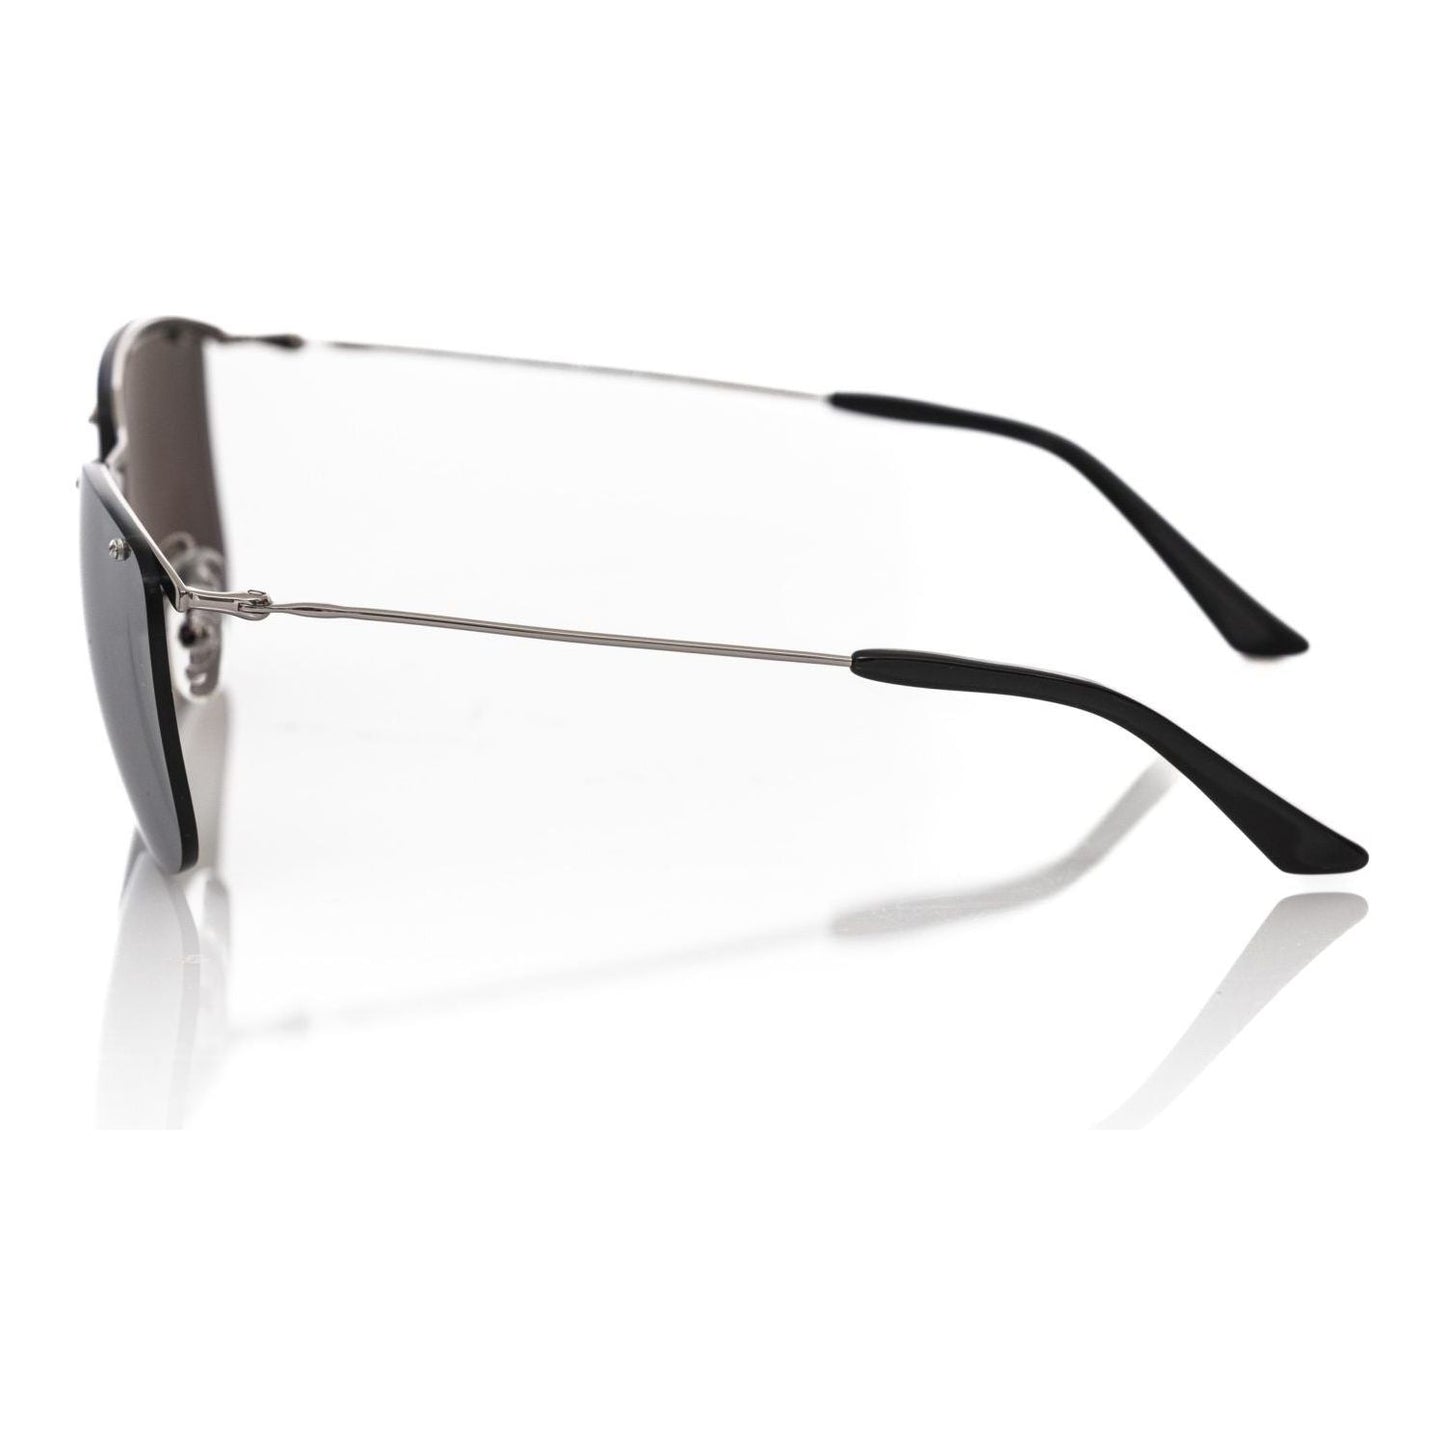 Frankie Morello Sleek Silver Clubmaster Sunglasses silver-metallic-fibre-sunglasses